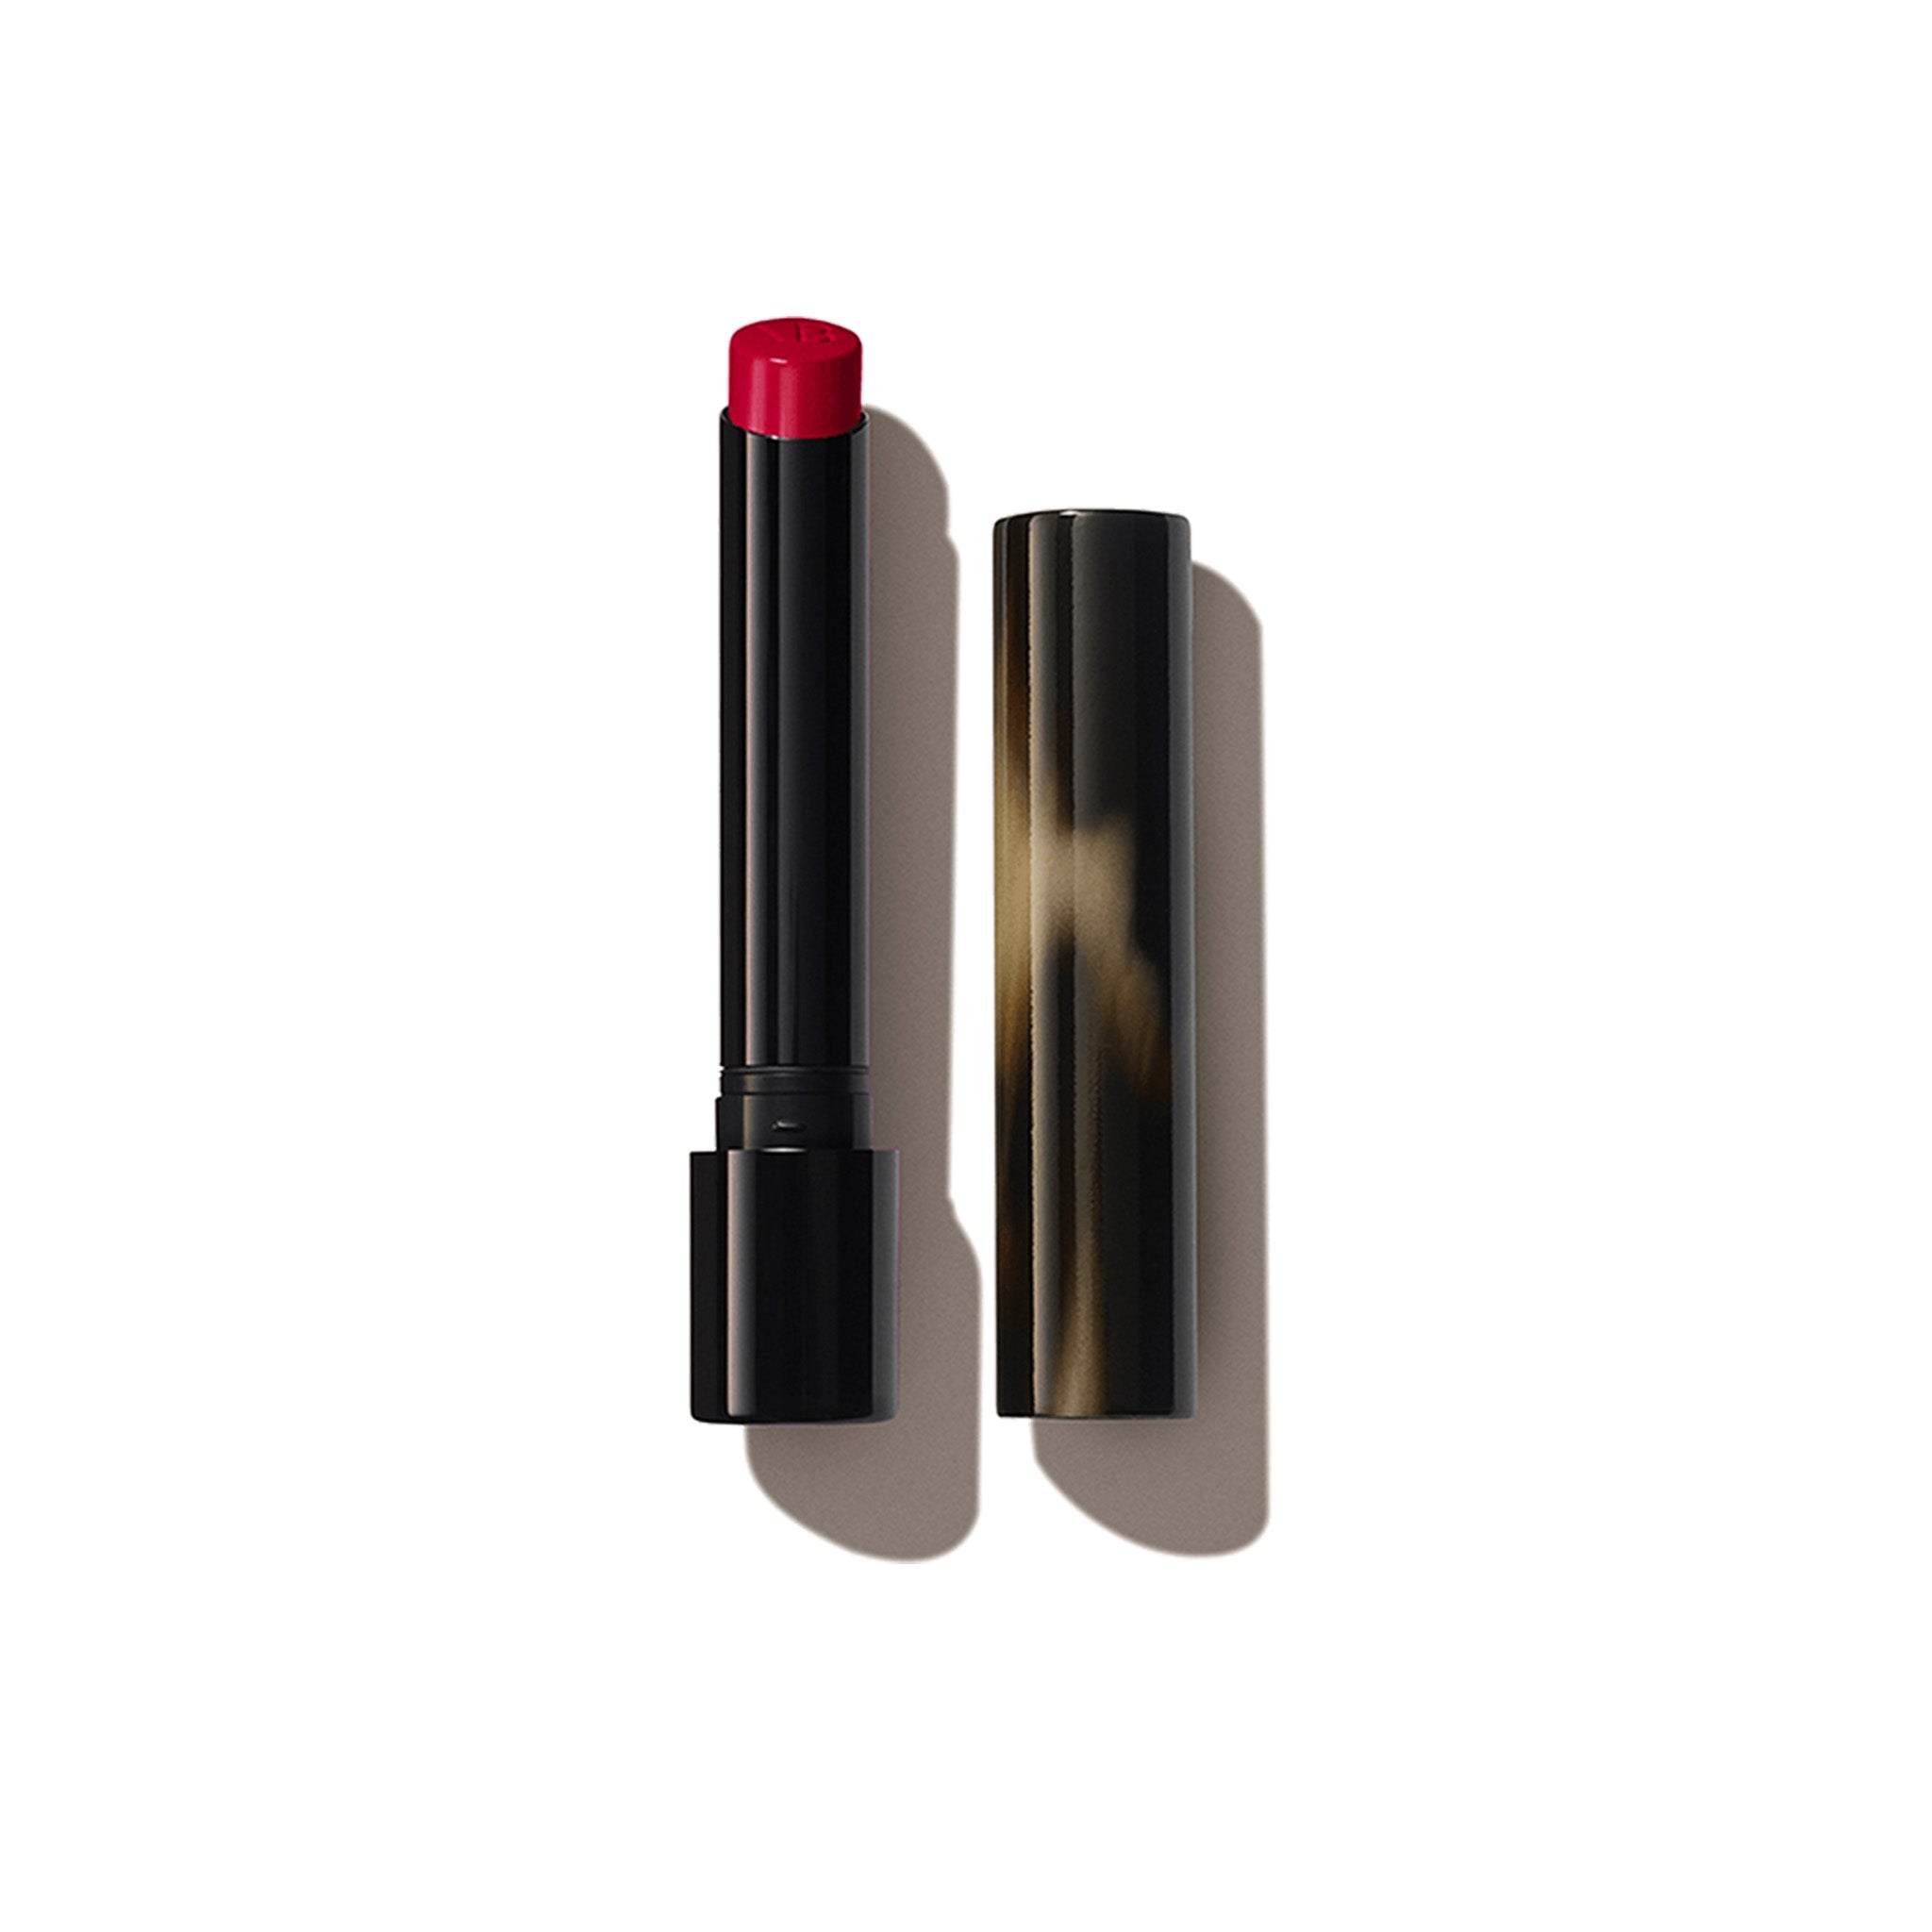 Victoria Beckham Beauty Posh Lipstick - Pop